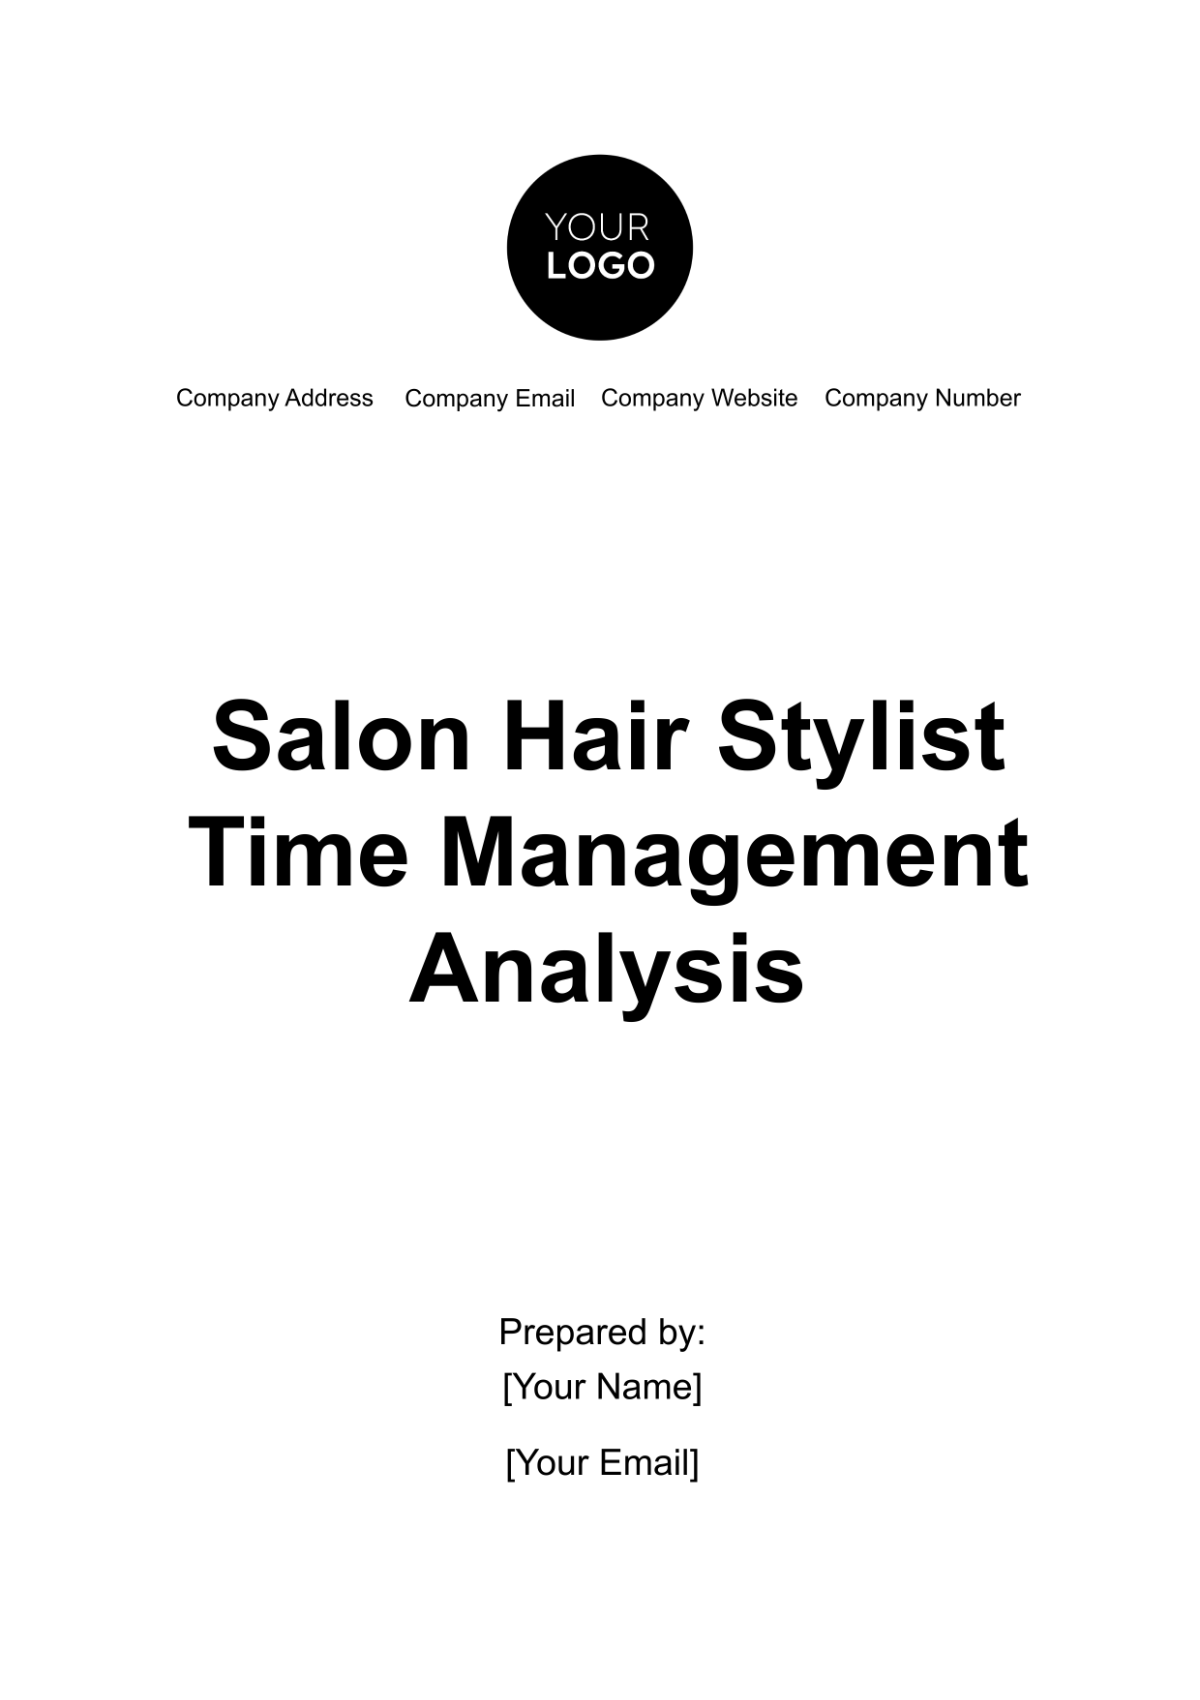 Salon Hair Stylist Time Management Analysis Template